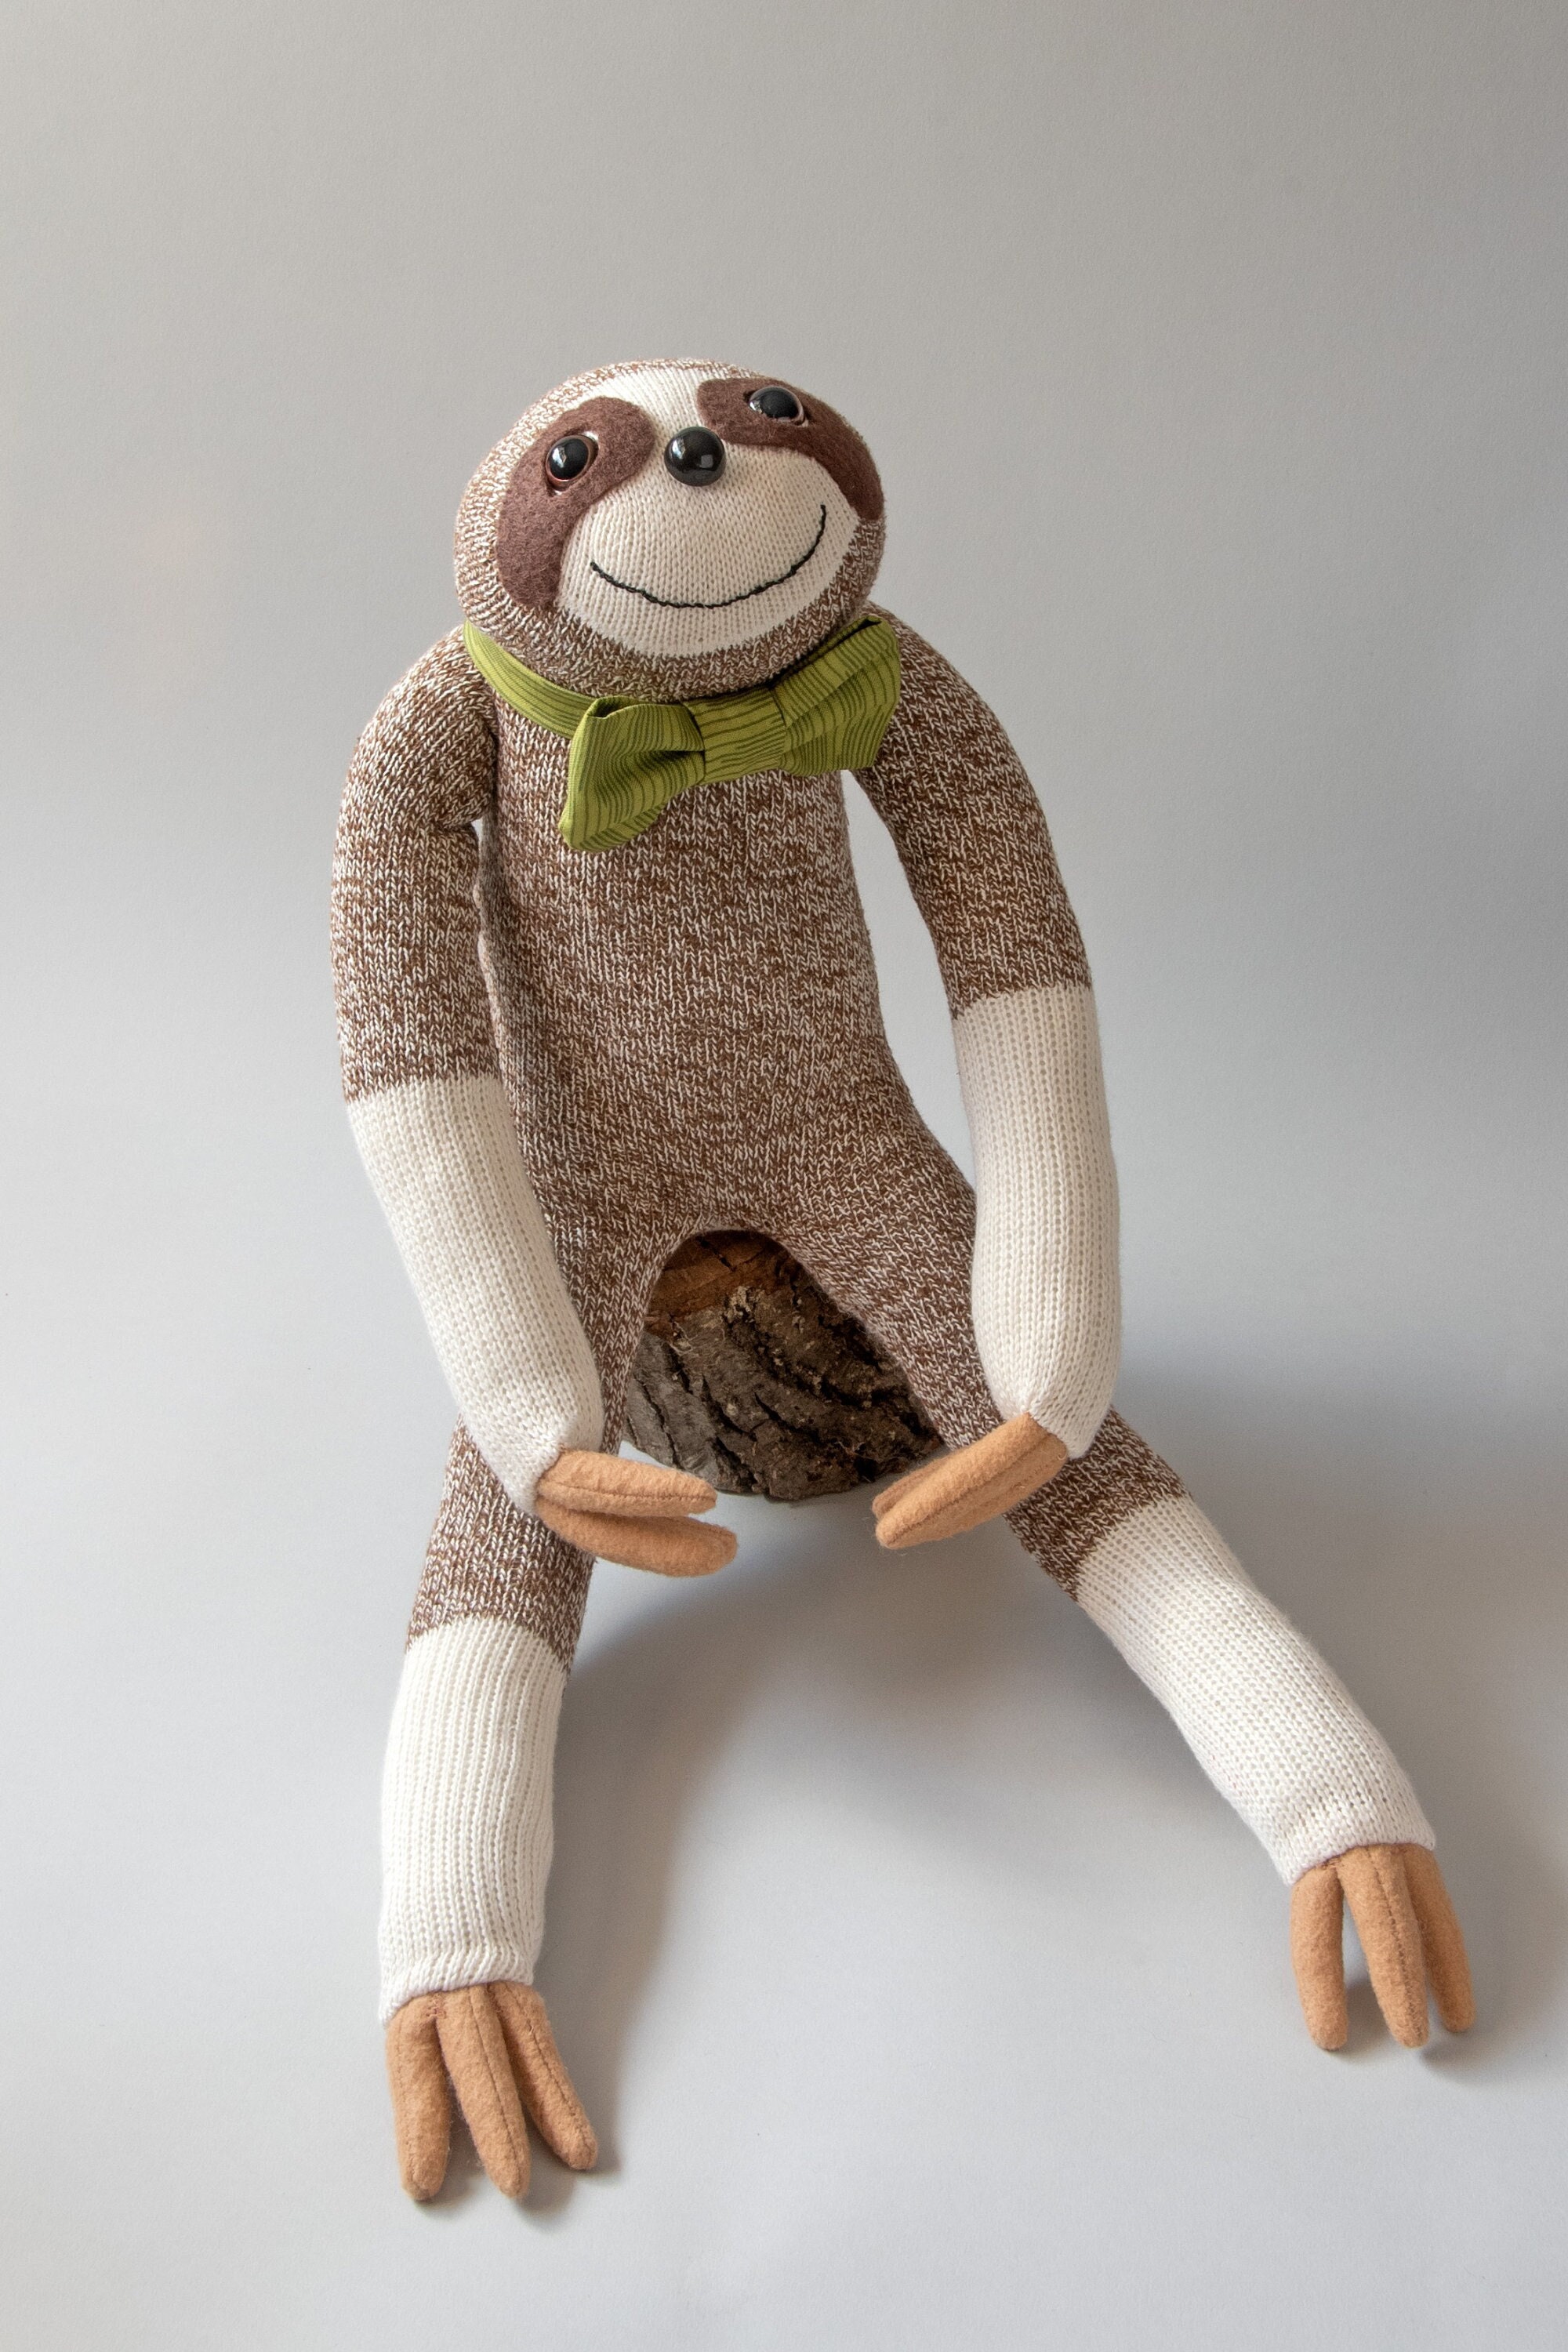 Emotional Support Sloth Plush Stuffed Animal Personalized Gift Toy